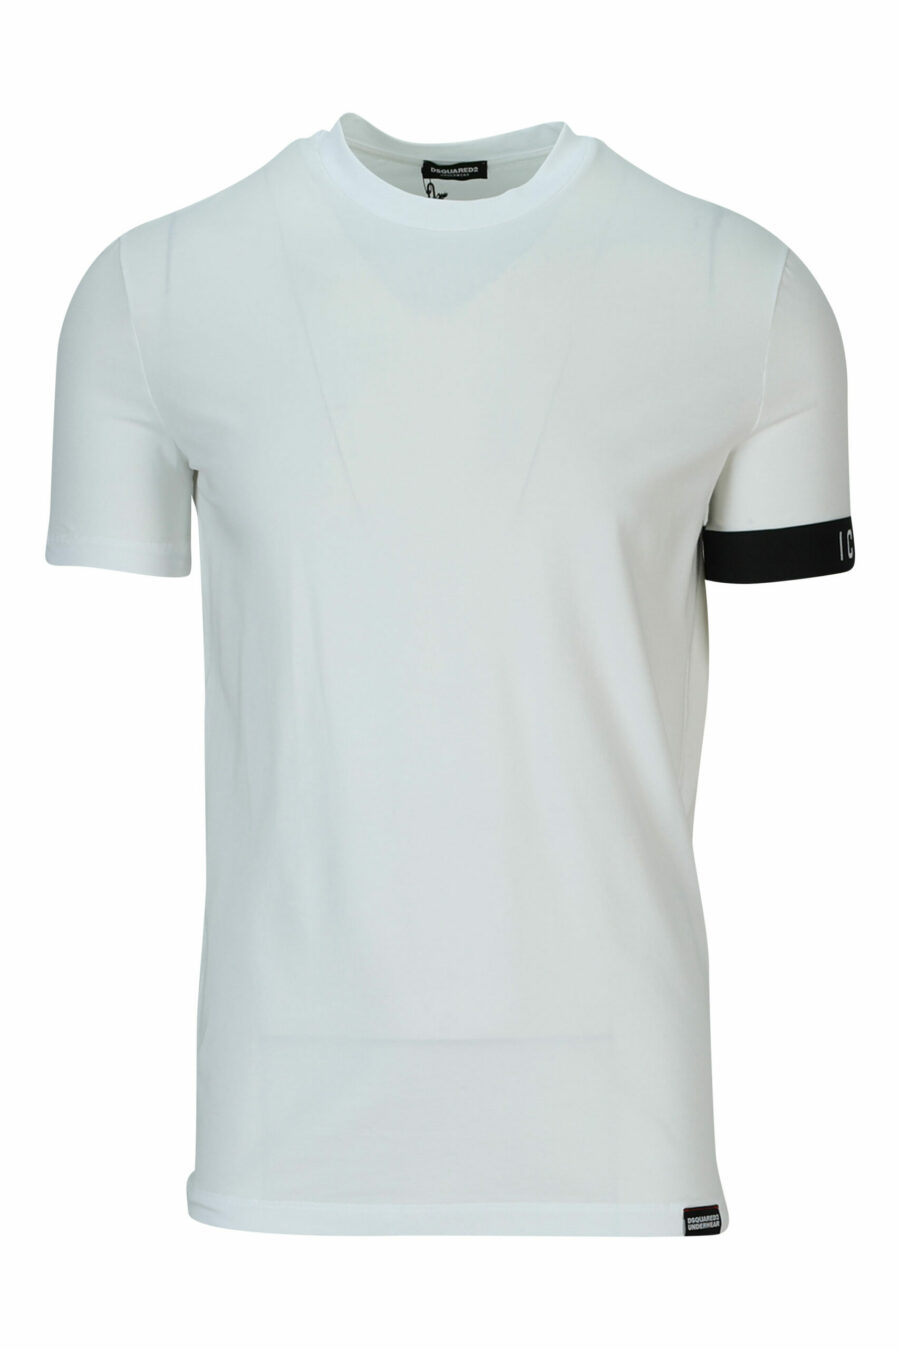 Camiseta blanca con logo negro - 8032674767493 scaled